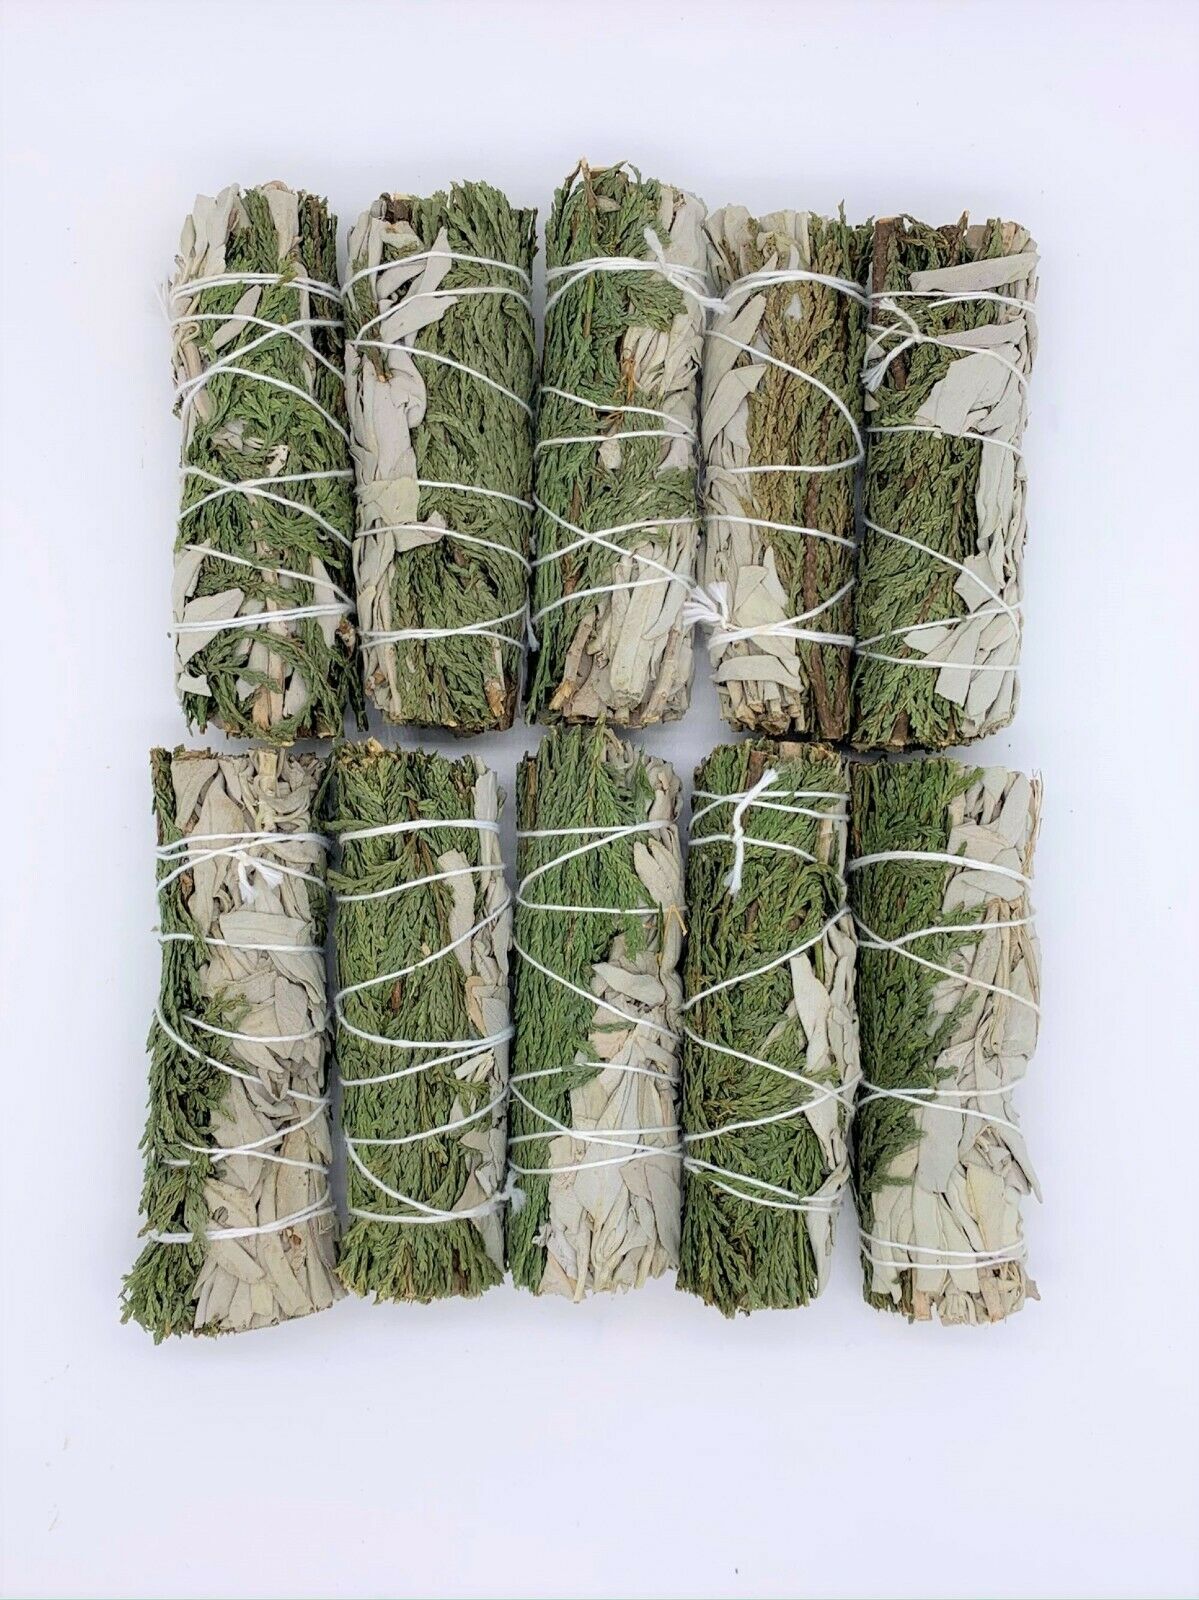 California White/Cedar Sage Smudge Sticks 4-5 inches long Negativity Removal